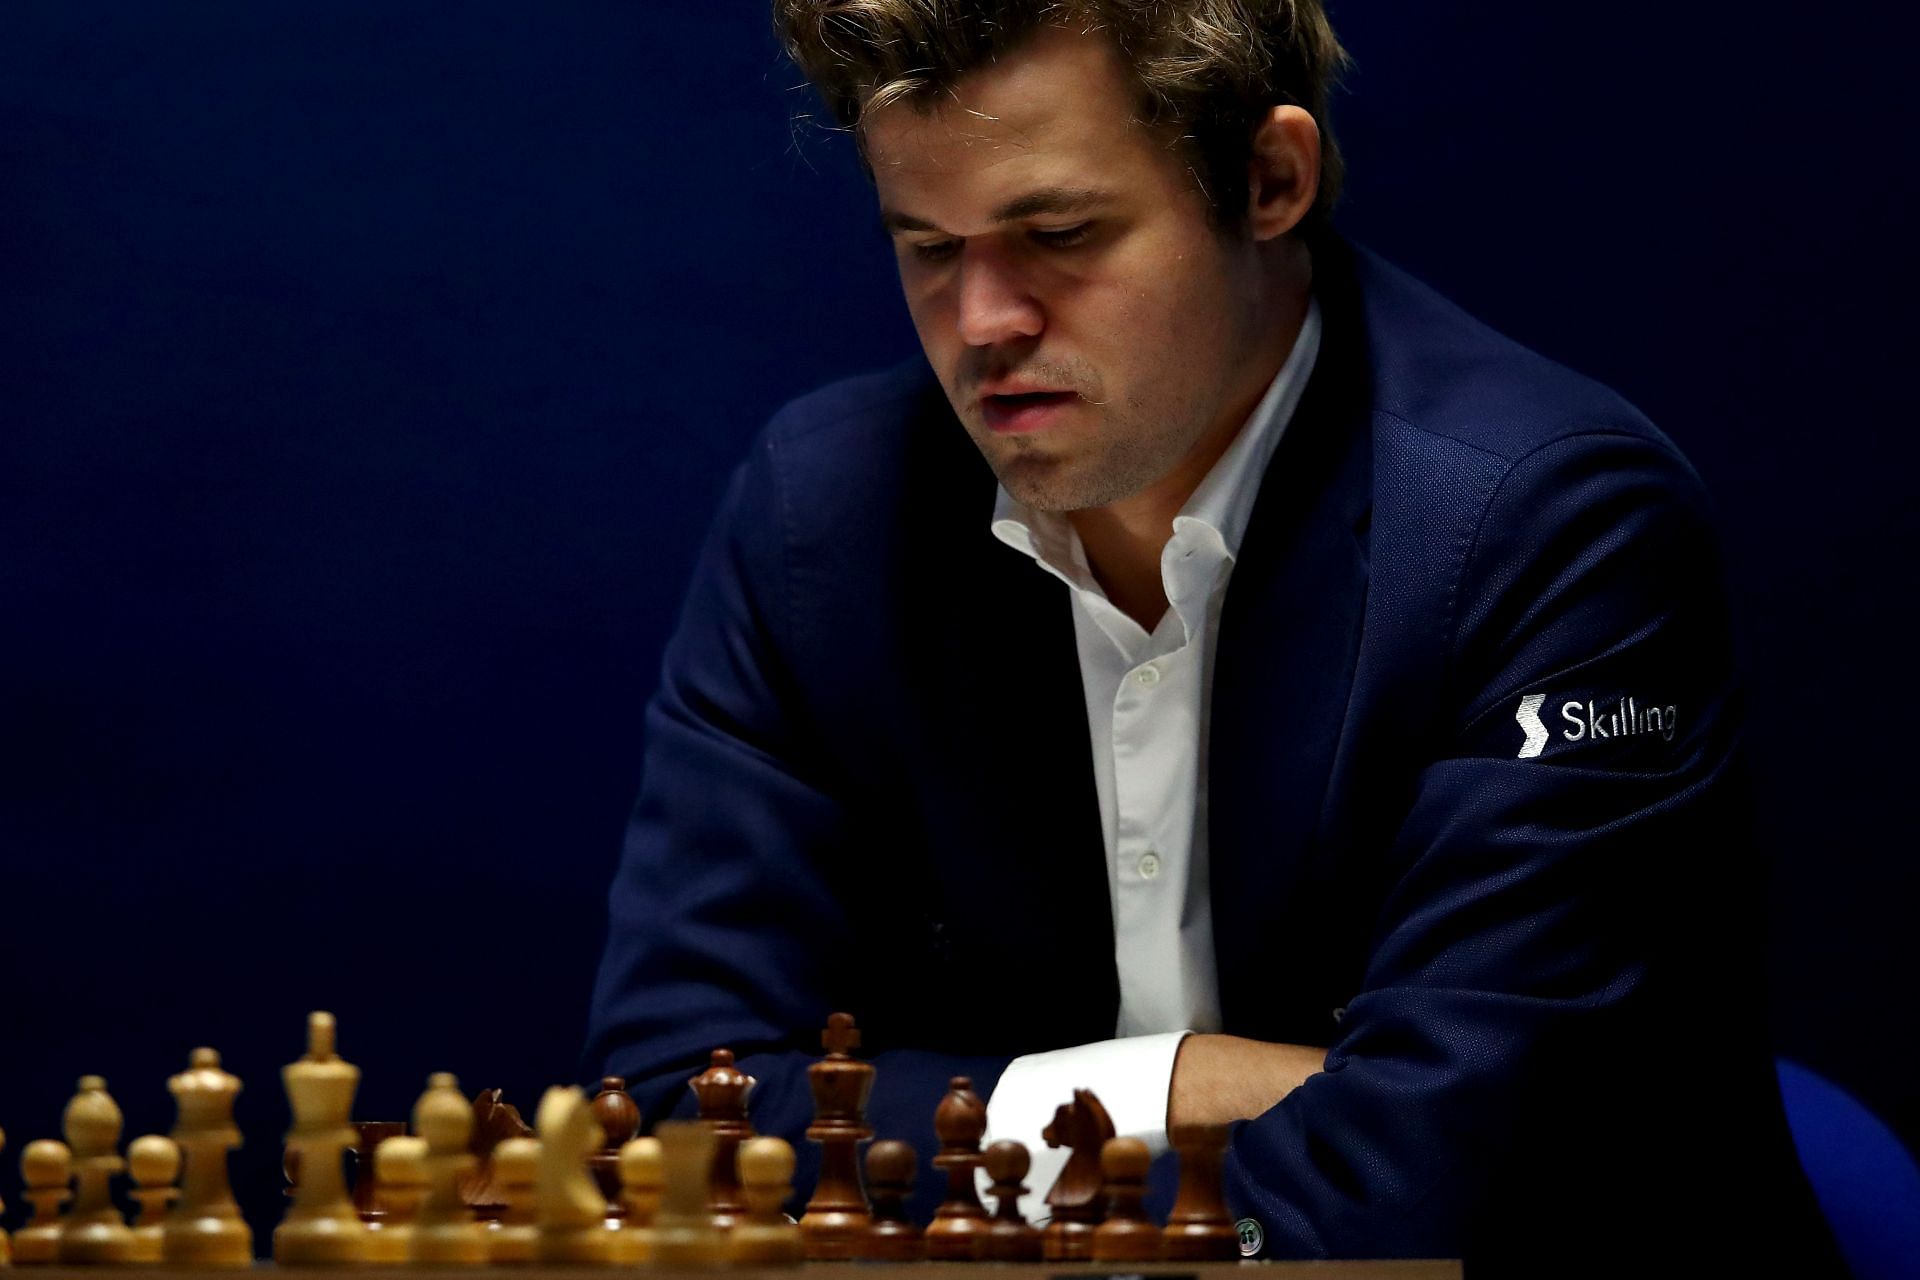 Praggnanandhaa beats Carlsen in tiebreaks to finish runners-up in